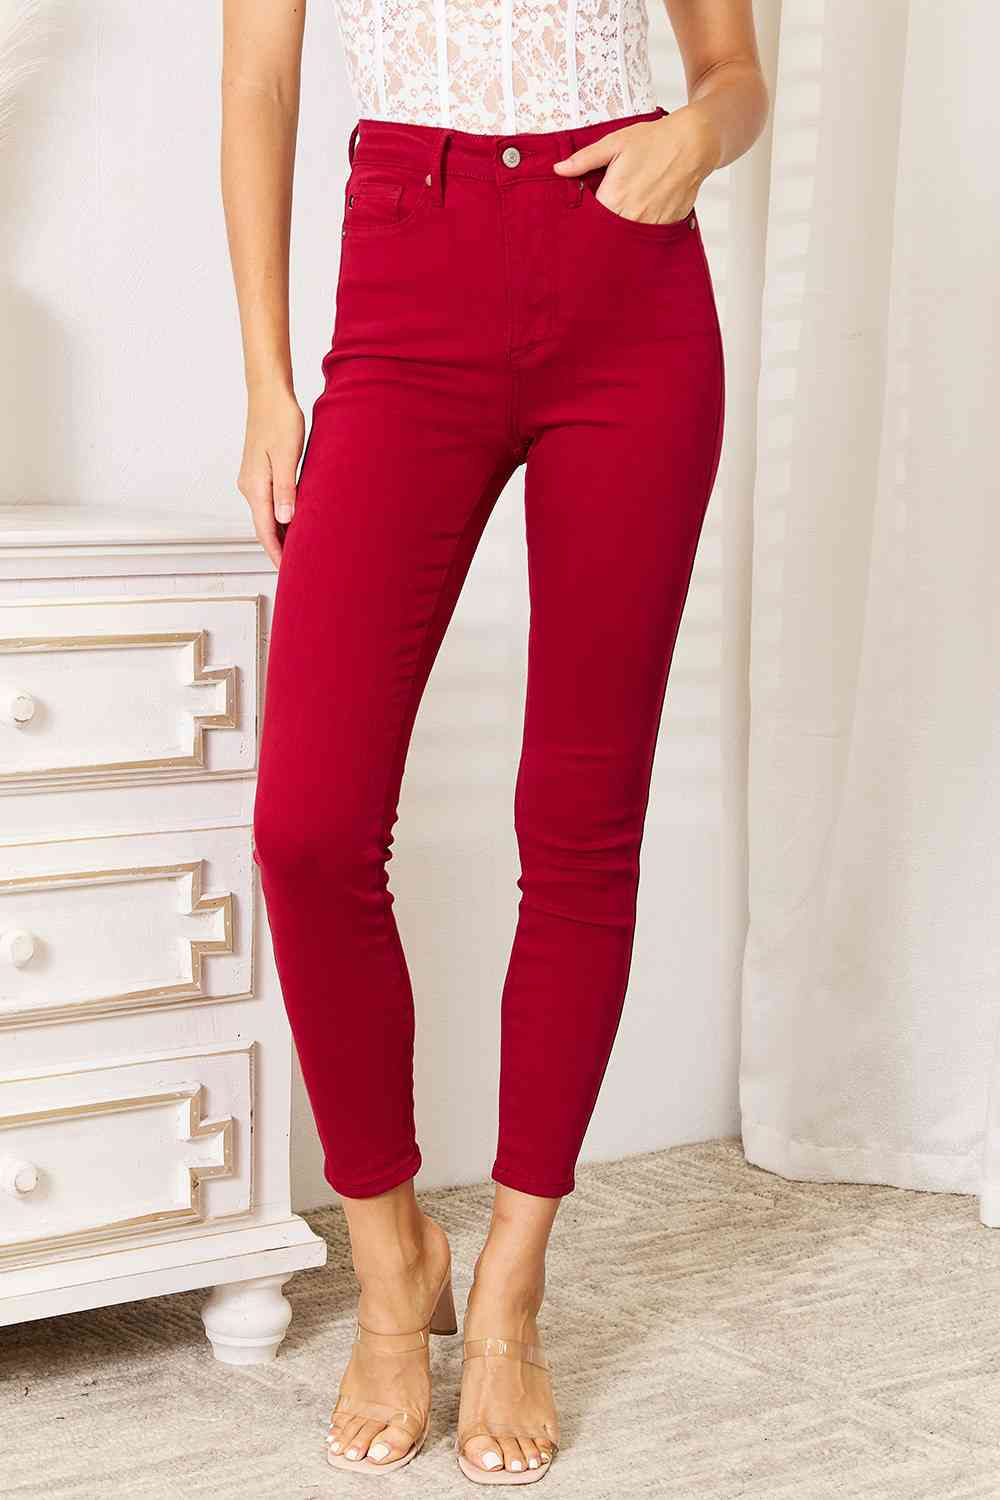 Judy Blue Deep Red High Waist Tummy Control Skinny Jeans jeans jehouze Deep Red 0(24) 